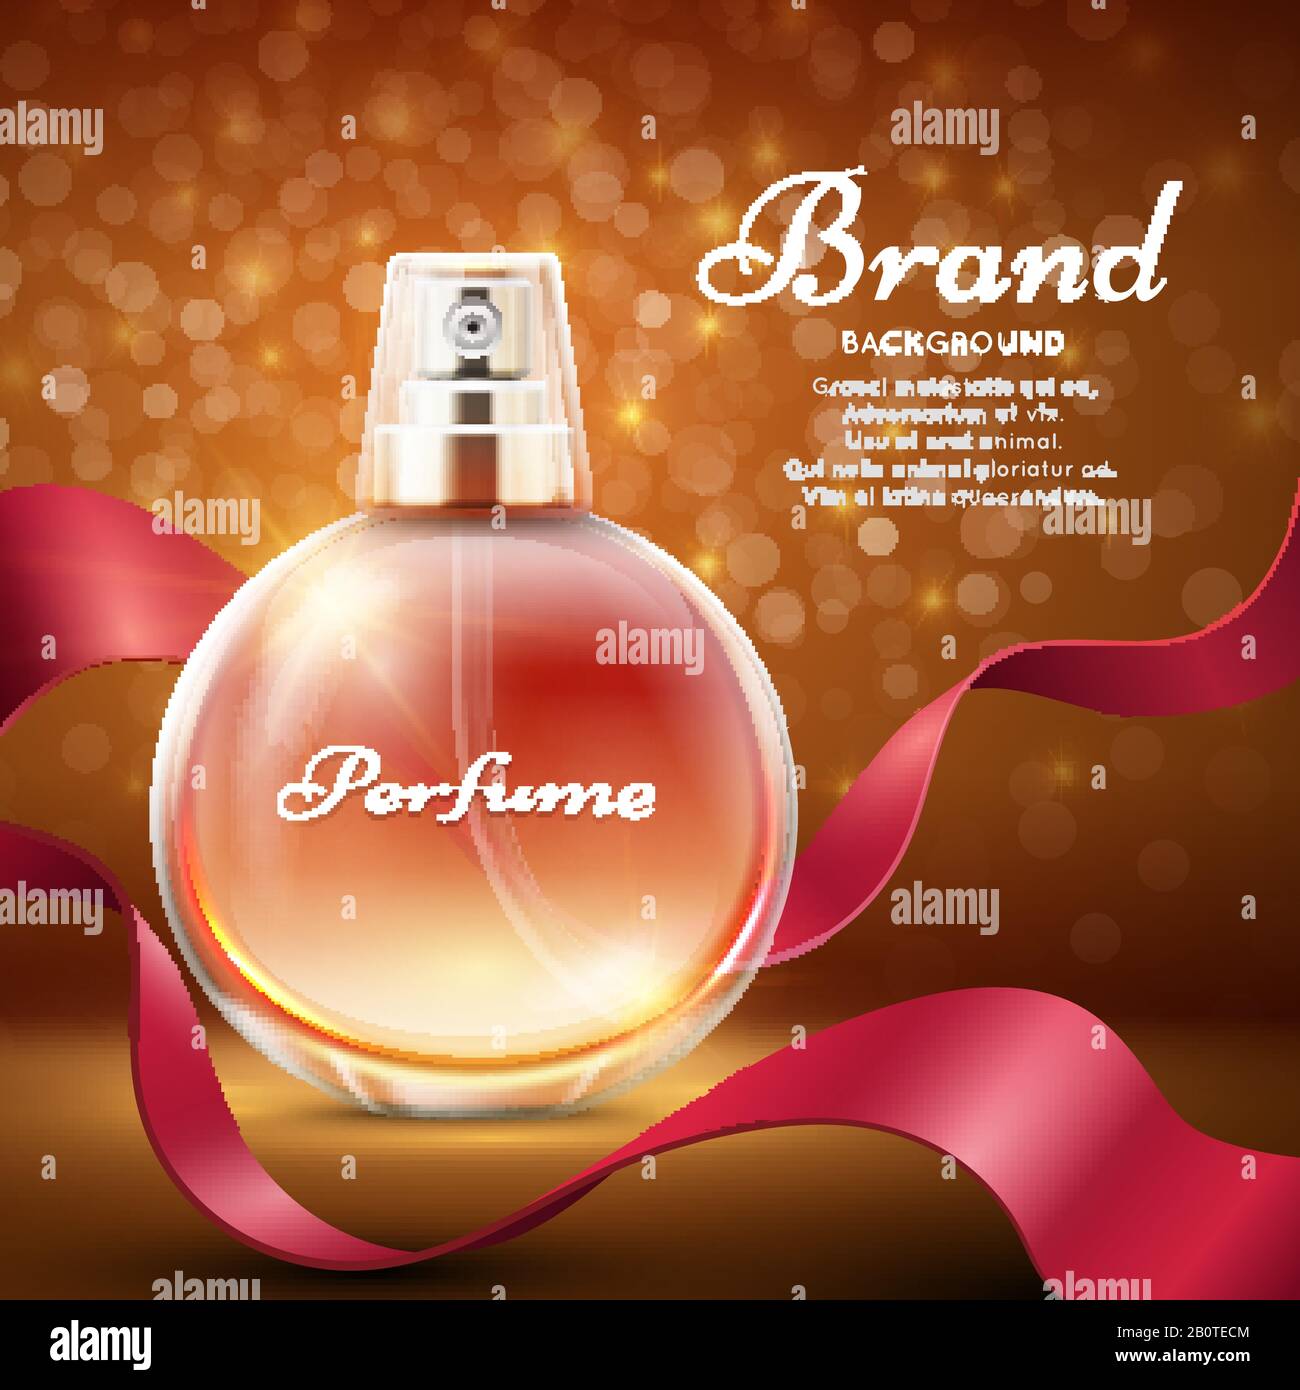 Perfume publicitario fotografías e imágenes de alta resolución - Alamy